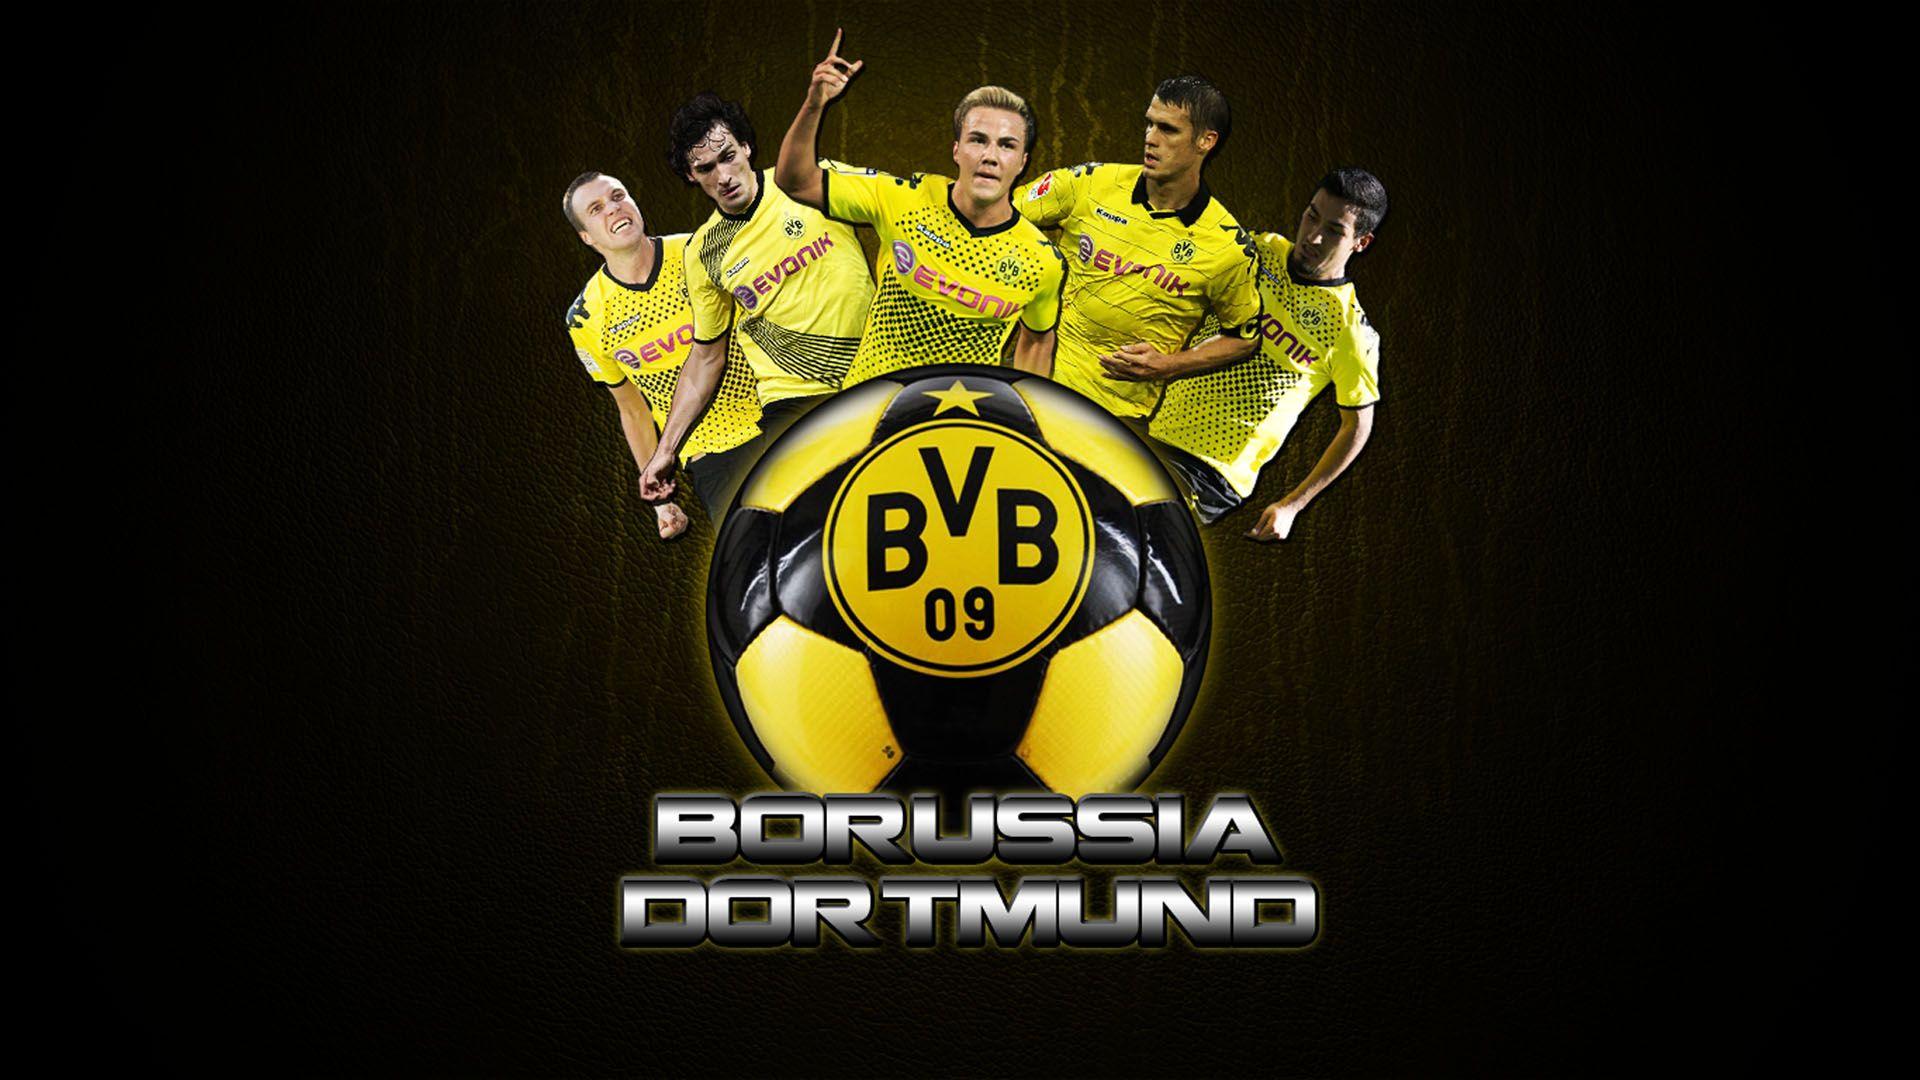 Borussia Dortmund Wallpapers Top Free Borussia Dortmund Backgrounds Wallpaperaccess